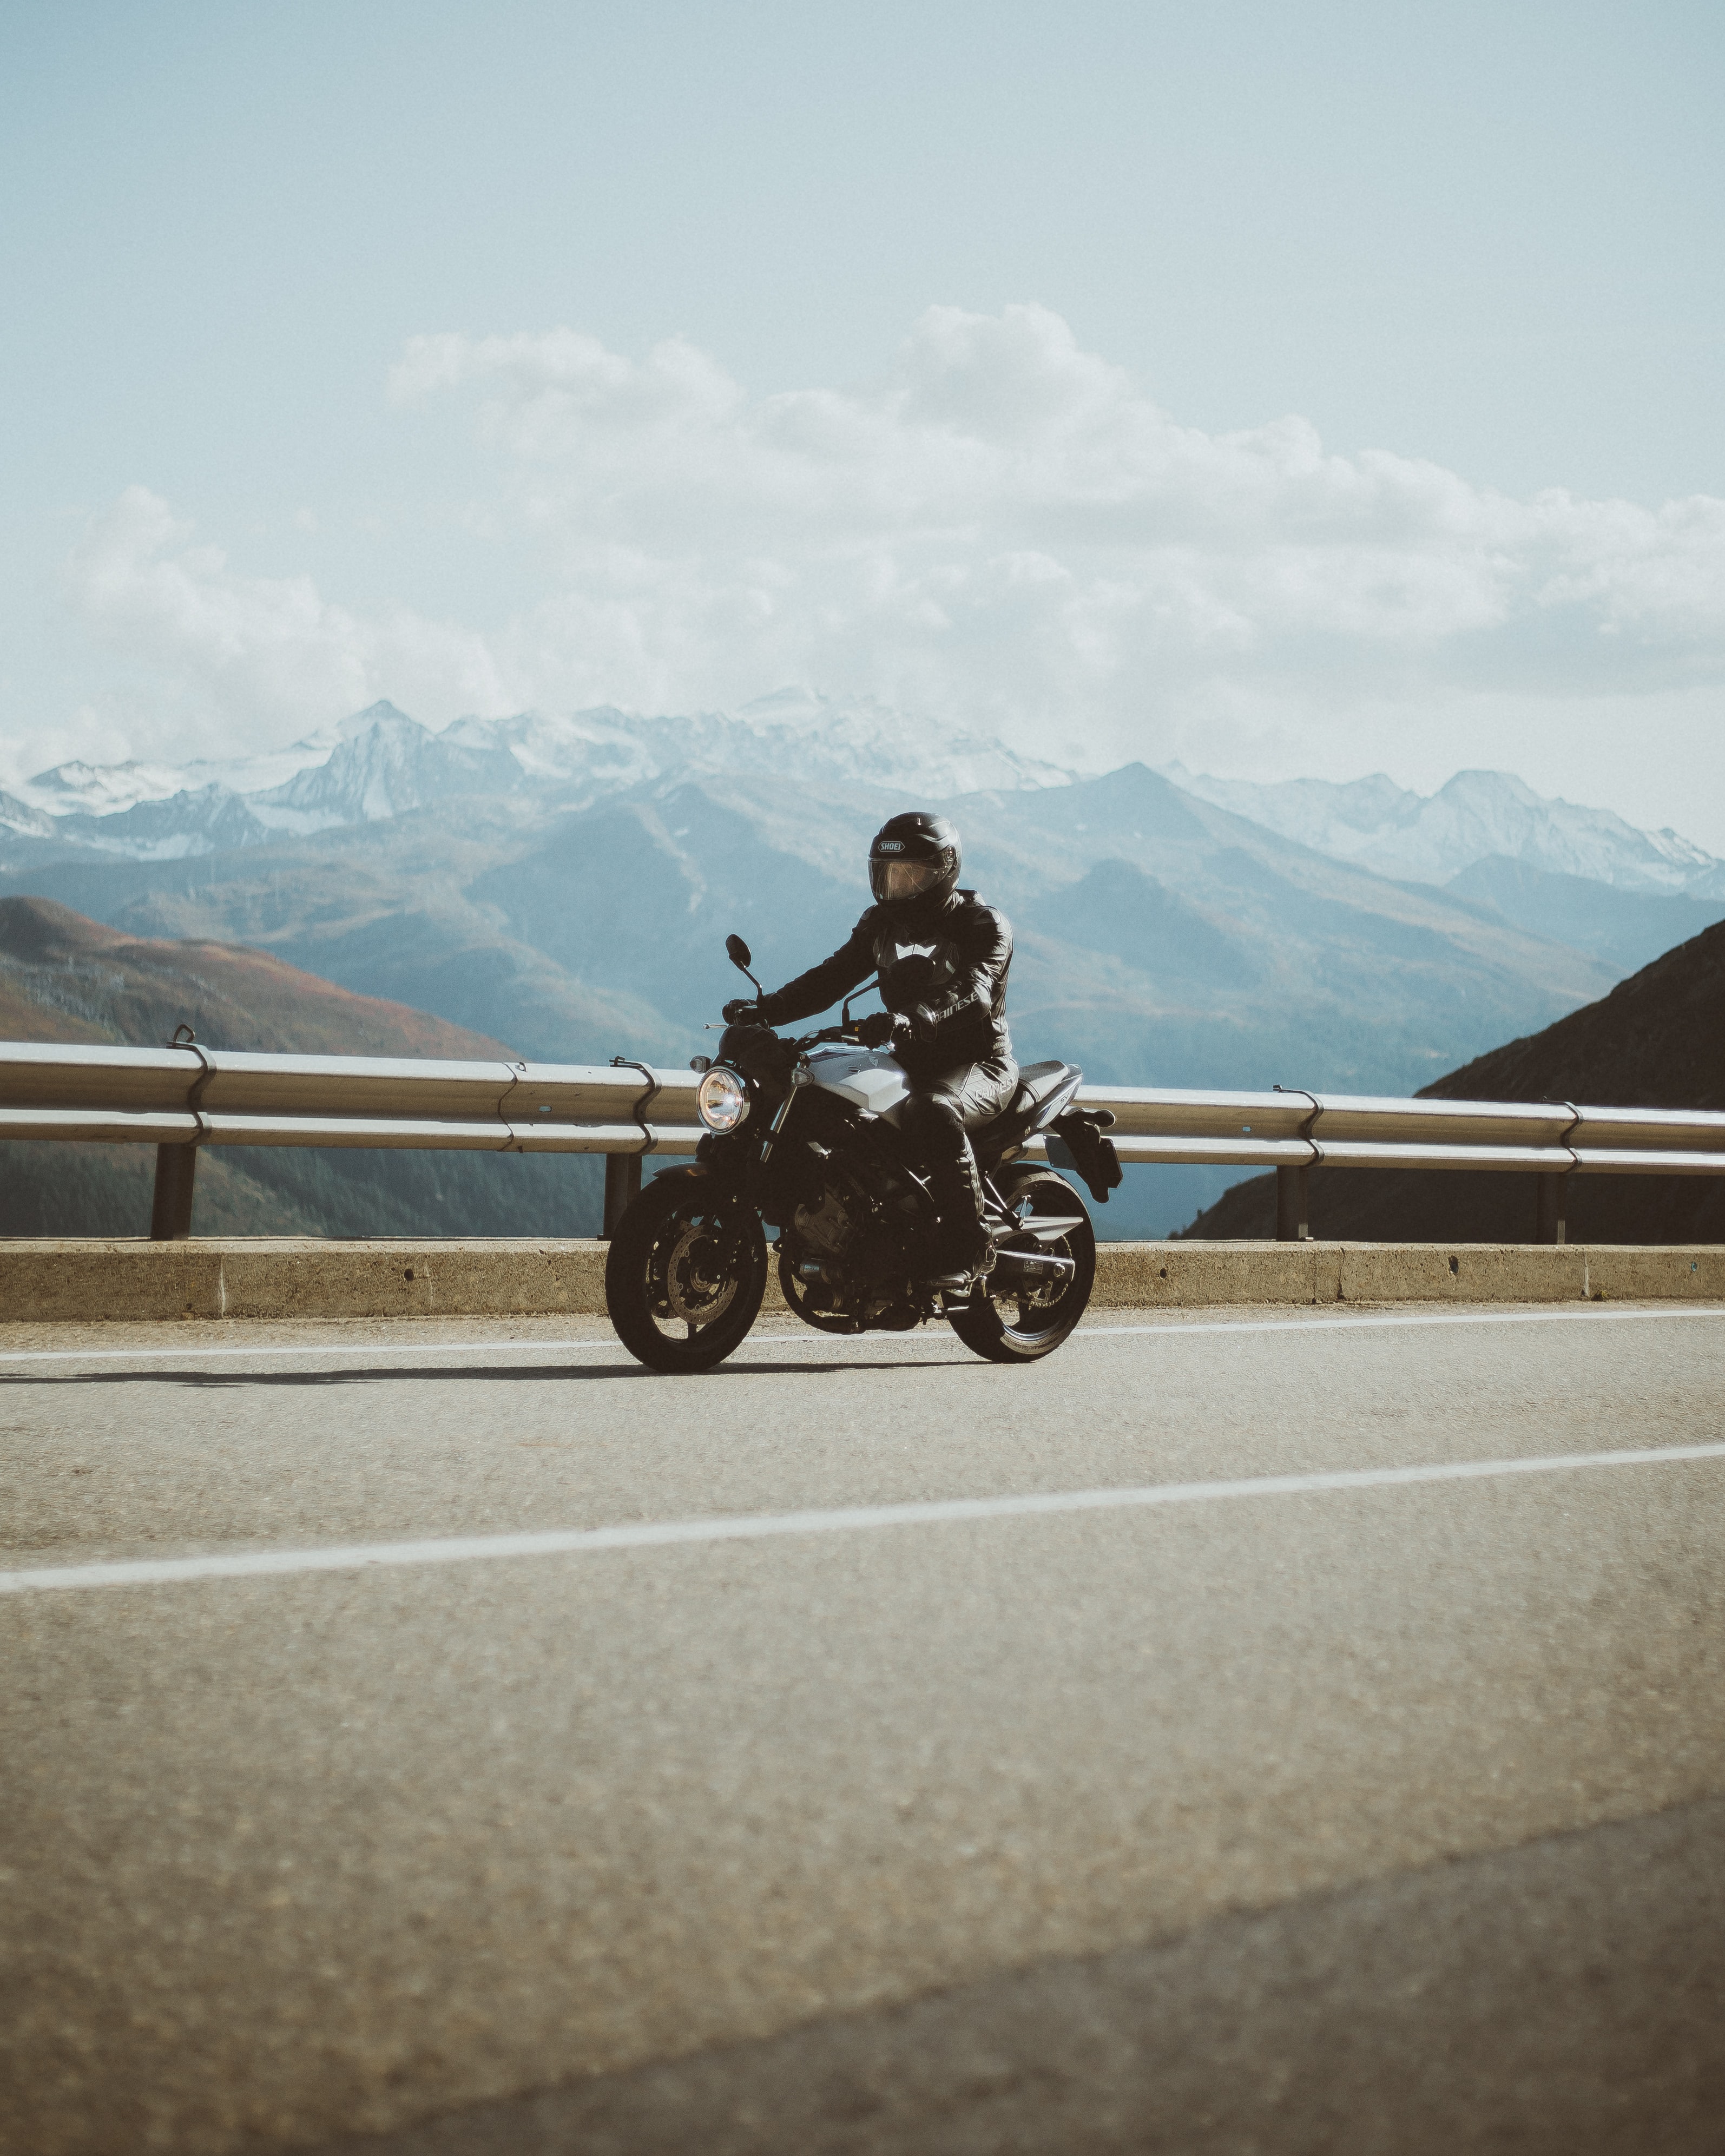 Motorcyclist Widescreen image